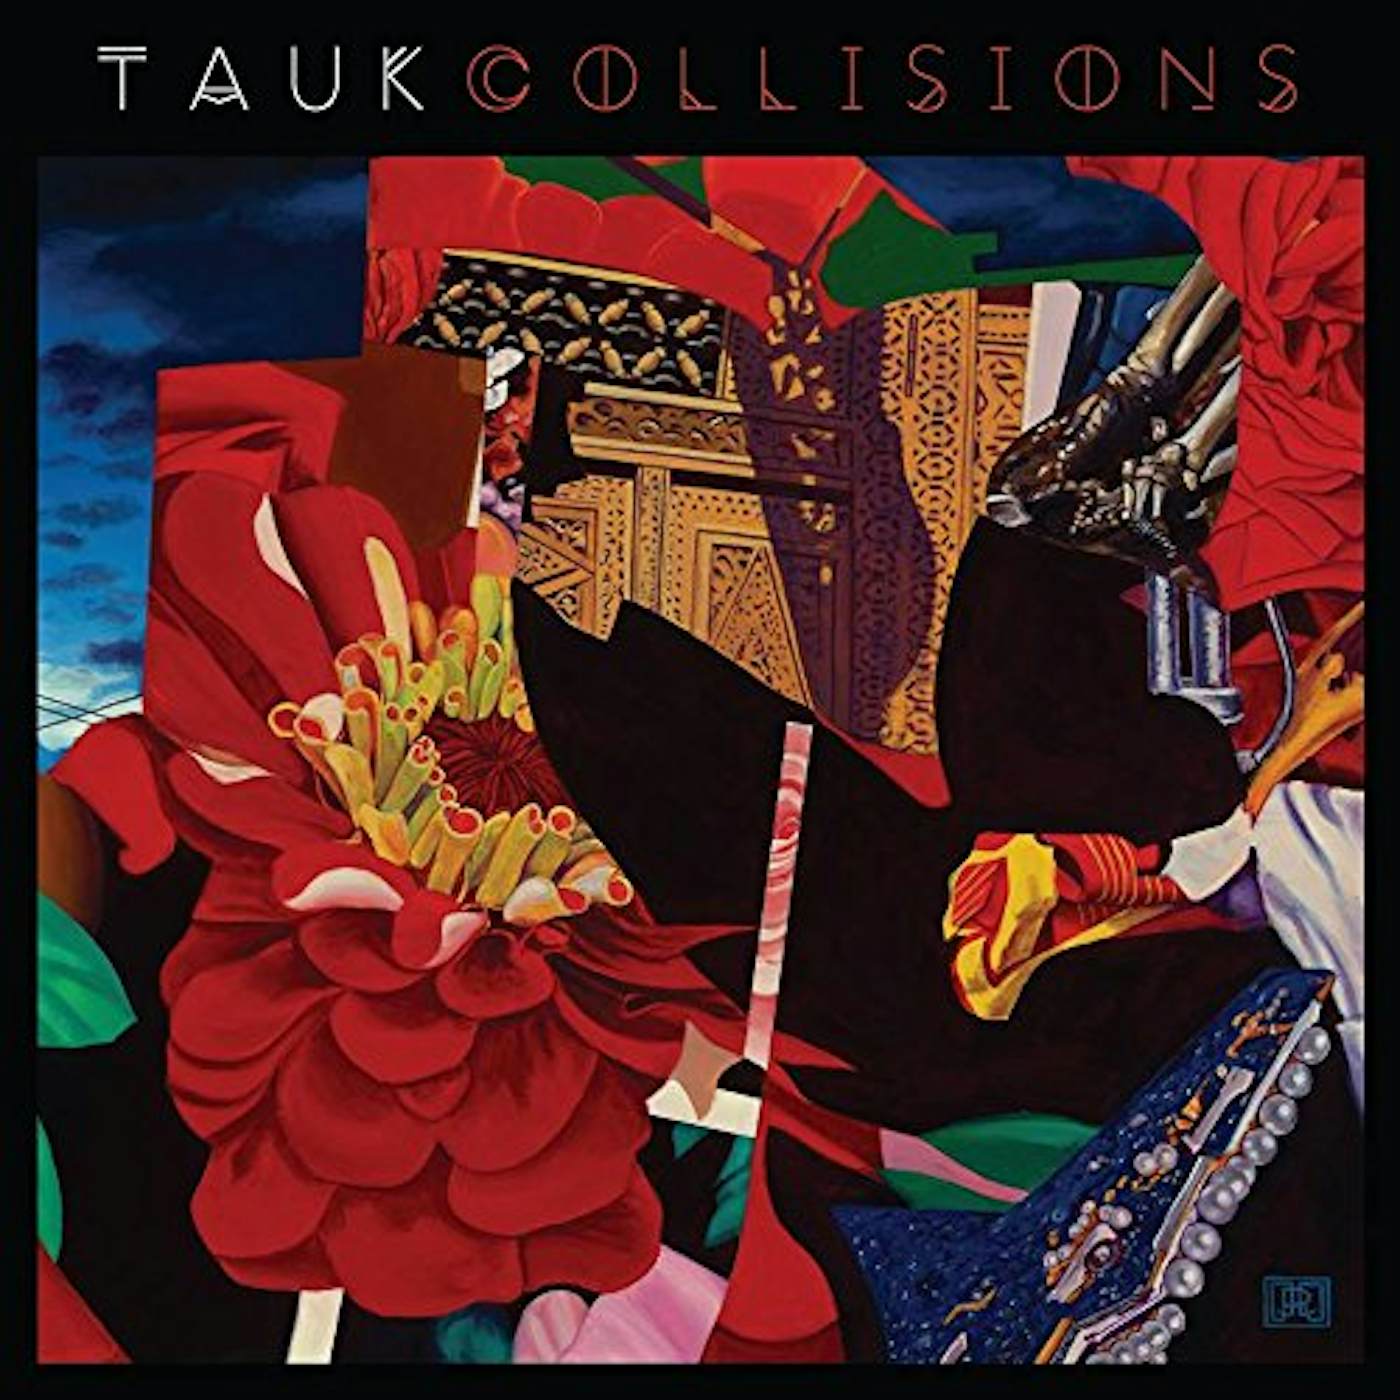 TAUK COLLISIONS CD